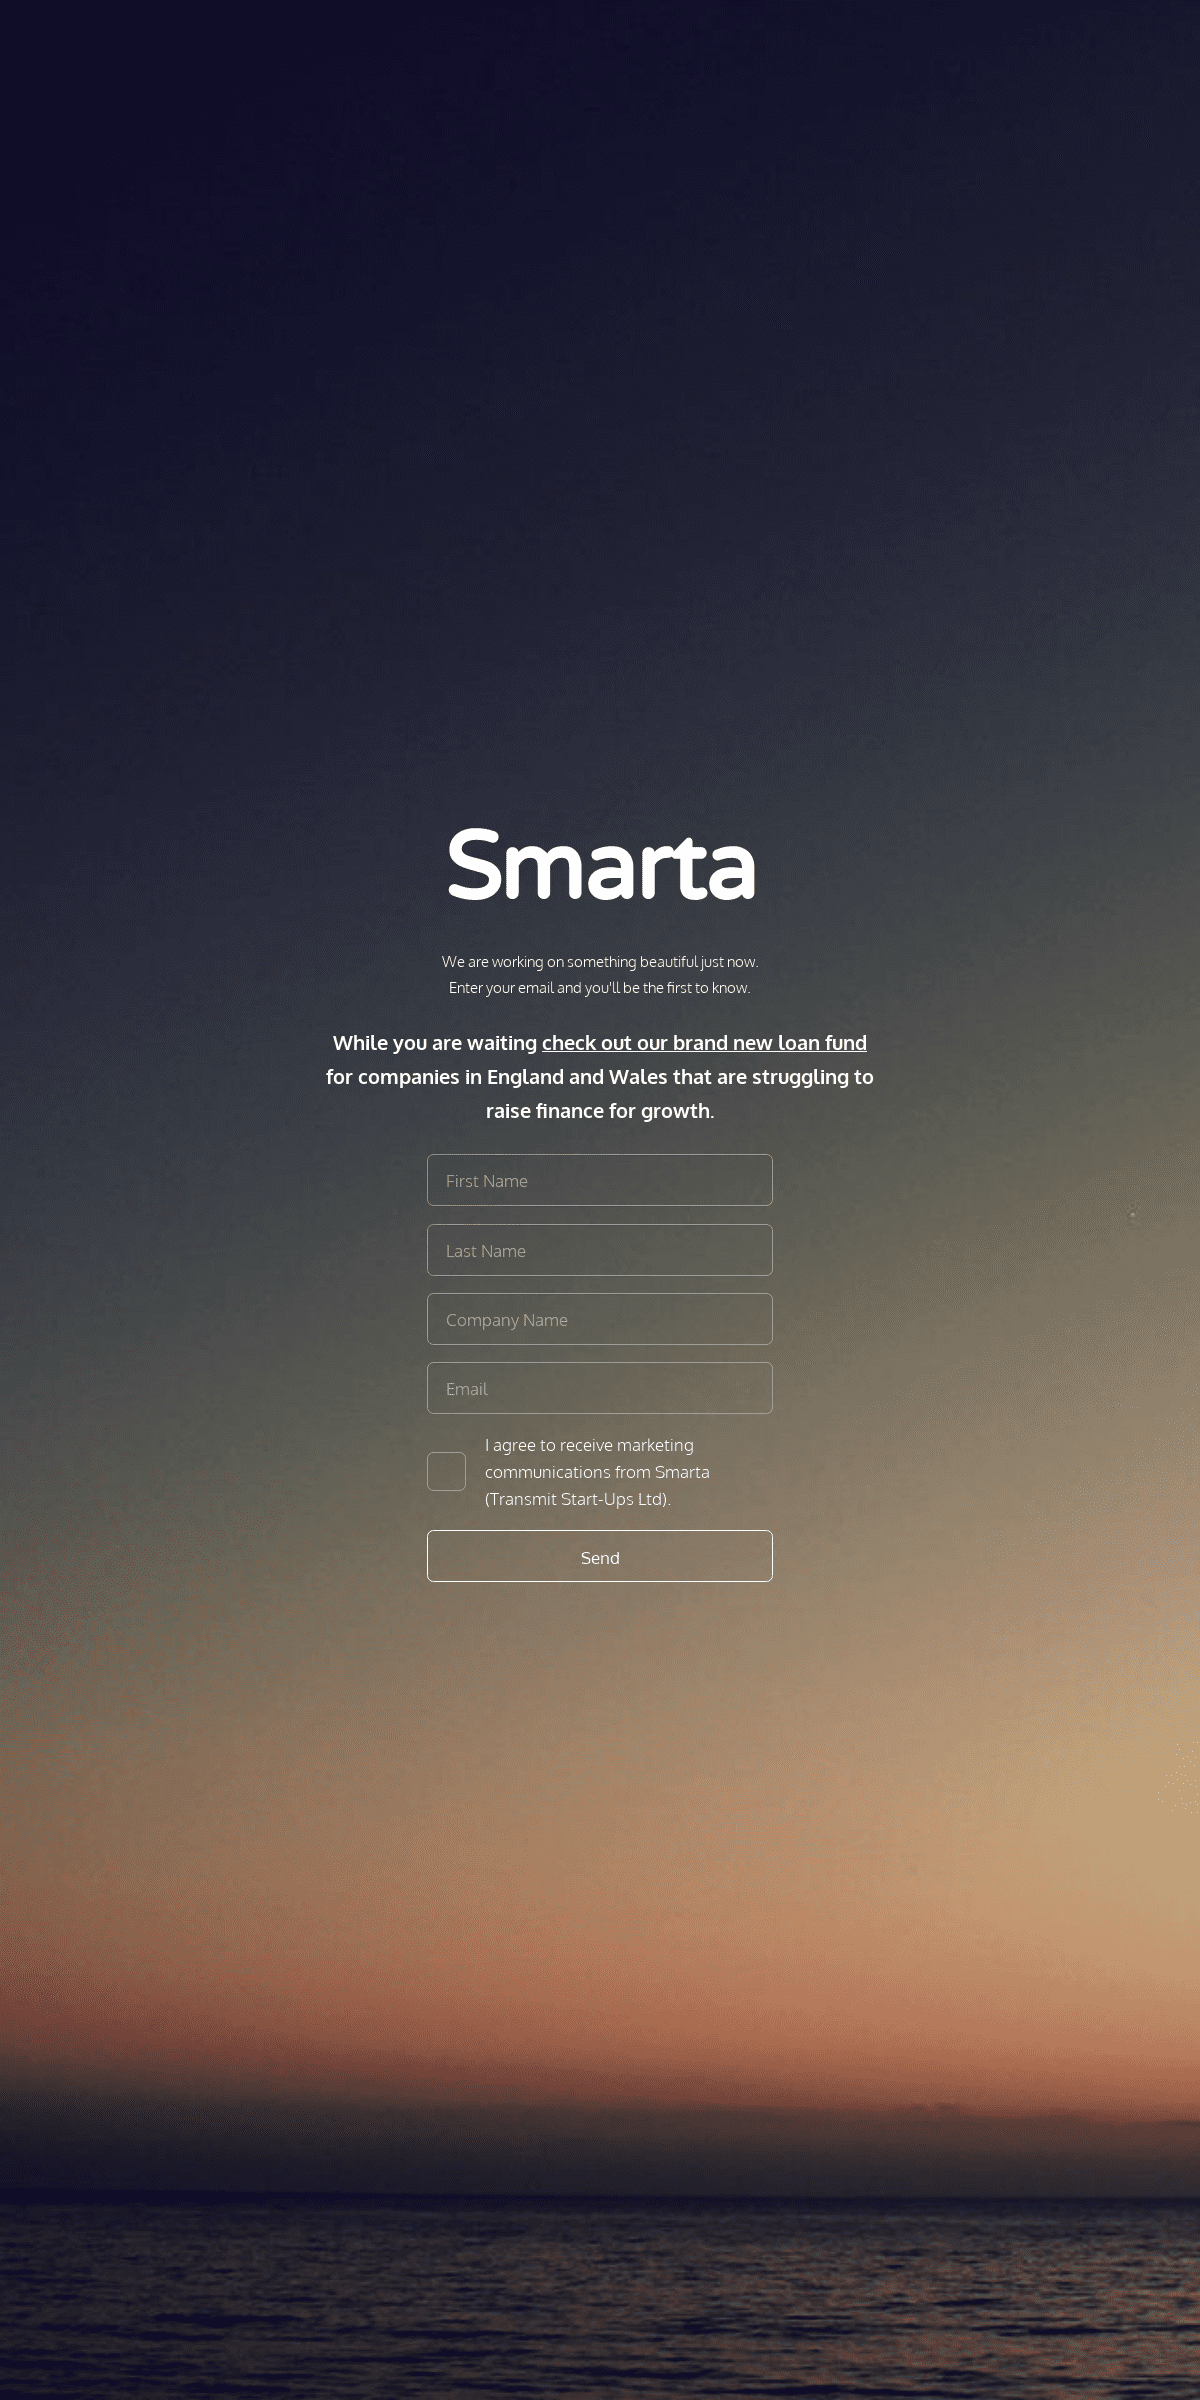 A complete backup of smarta.com